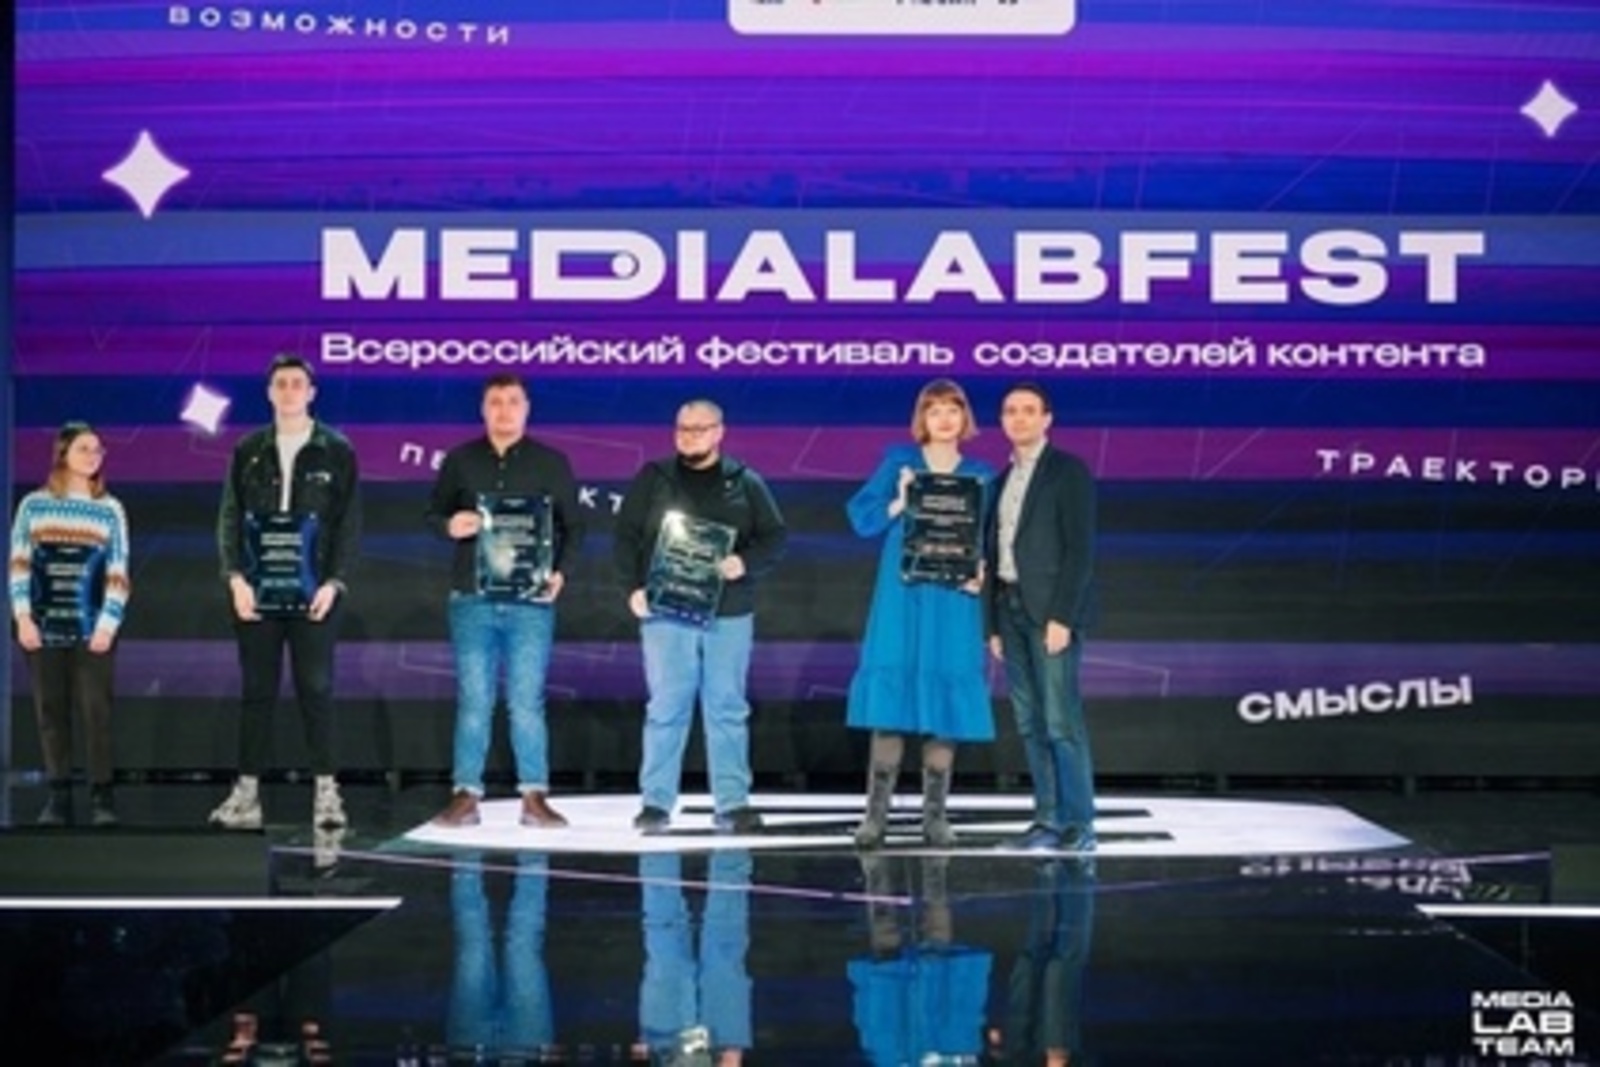 Представители Башкирии стали победителями на фестивале создателей контента MEDIALABFEST